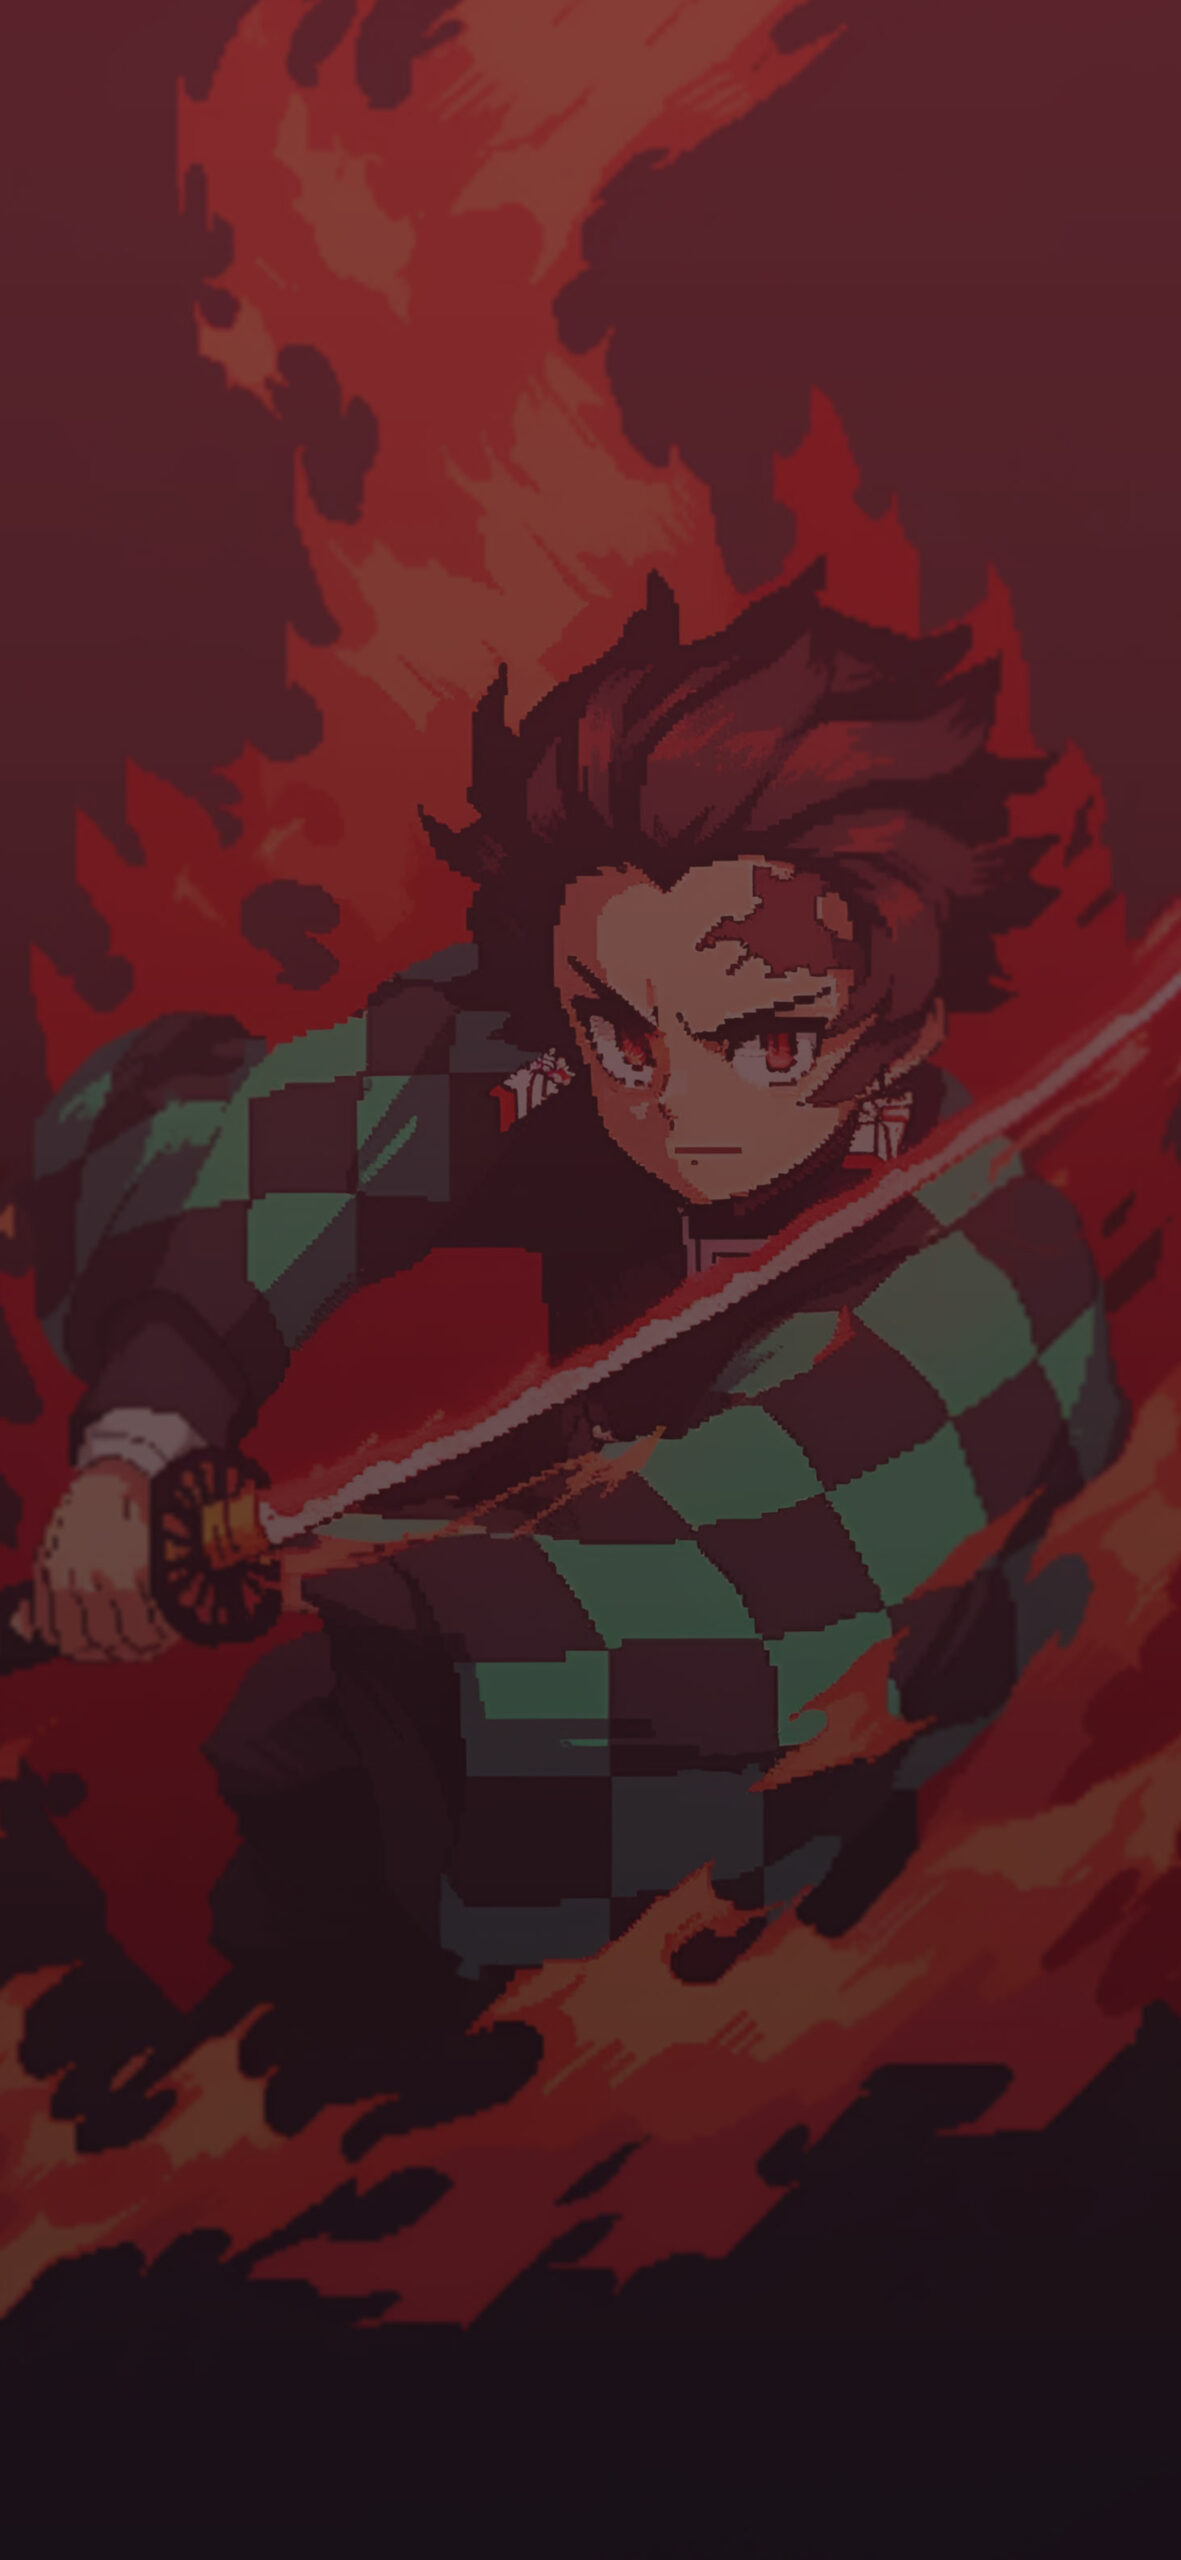 Demon slayer tanjiro in fire pixel art wallpaper Cool anime ae